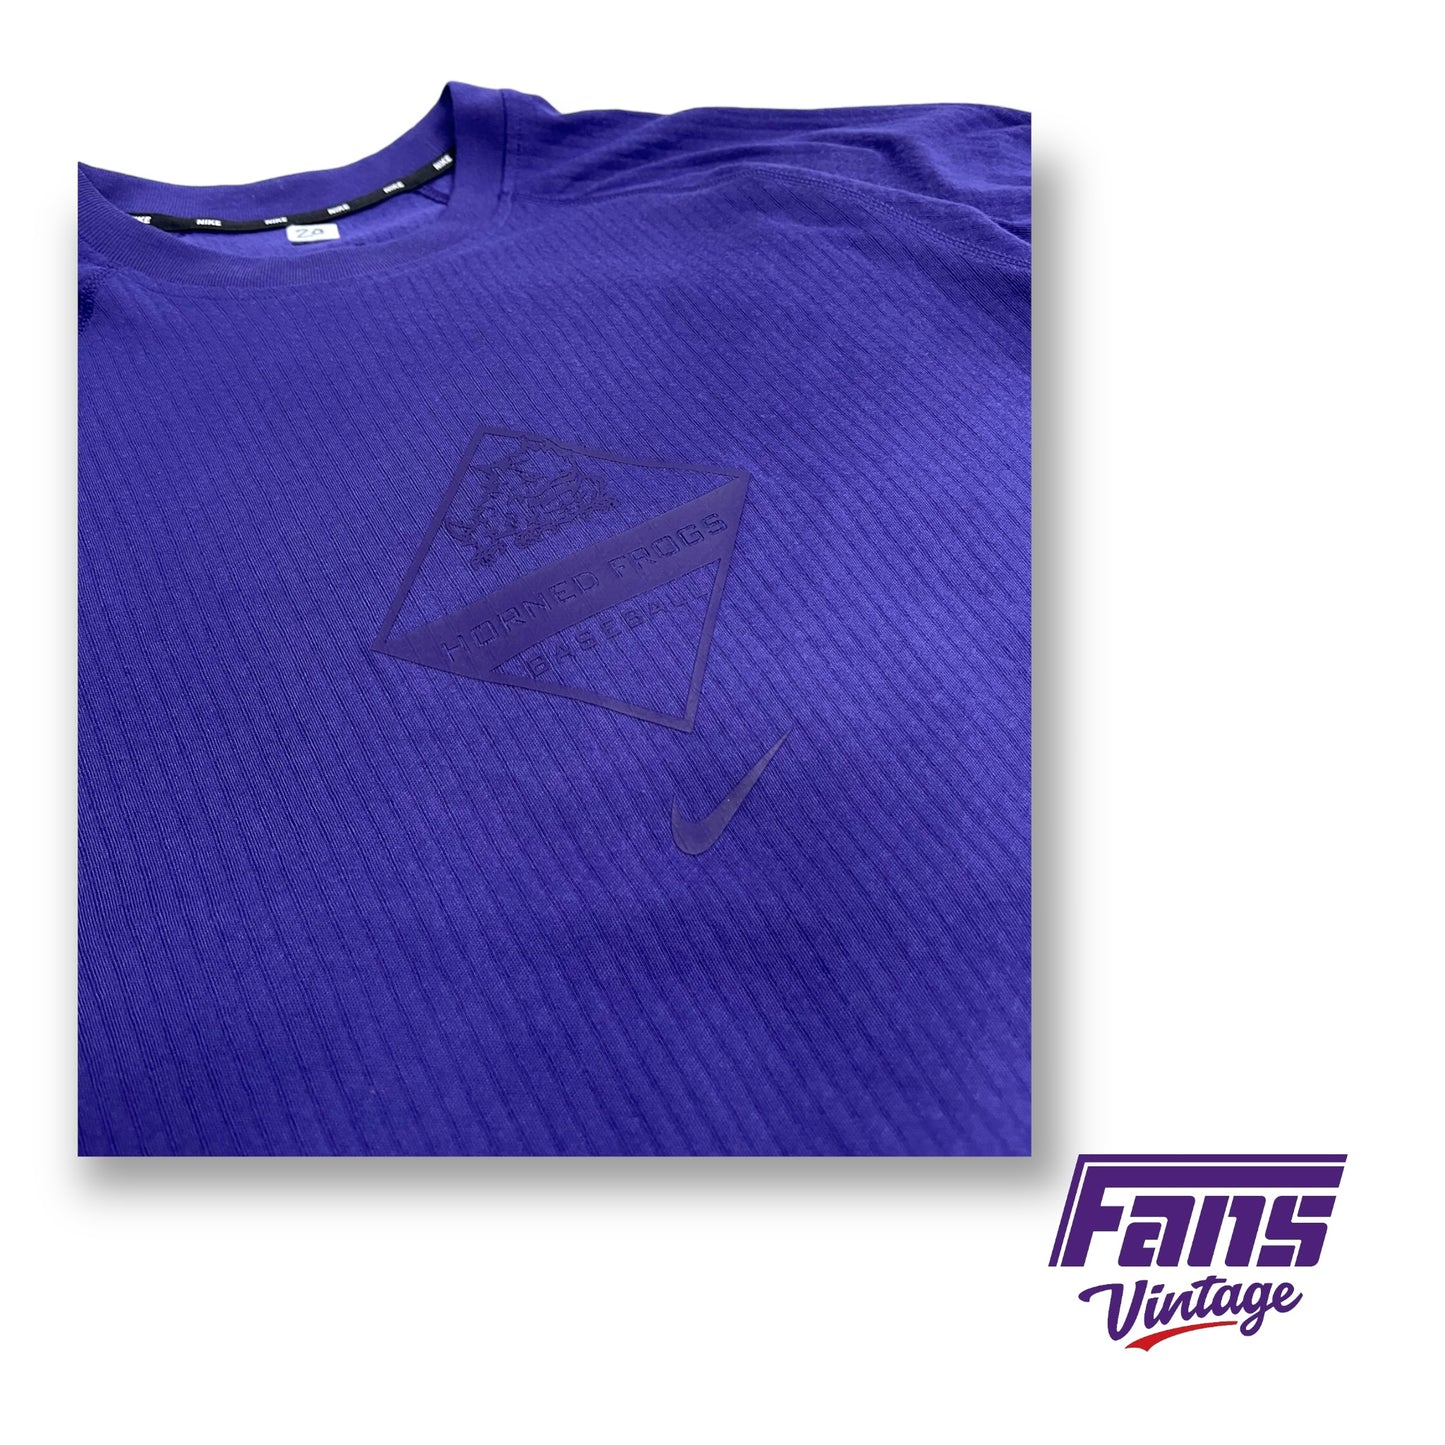 Rare TCU Baseball Team Issue Nike Baseball Raglan Shirt - Awesome Logo!